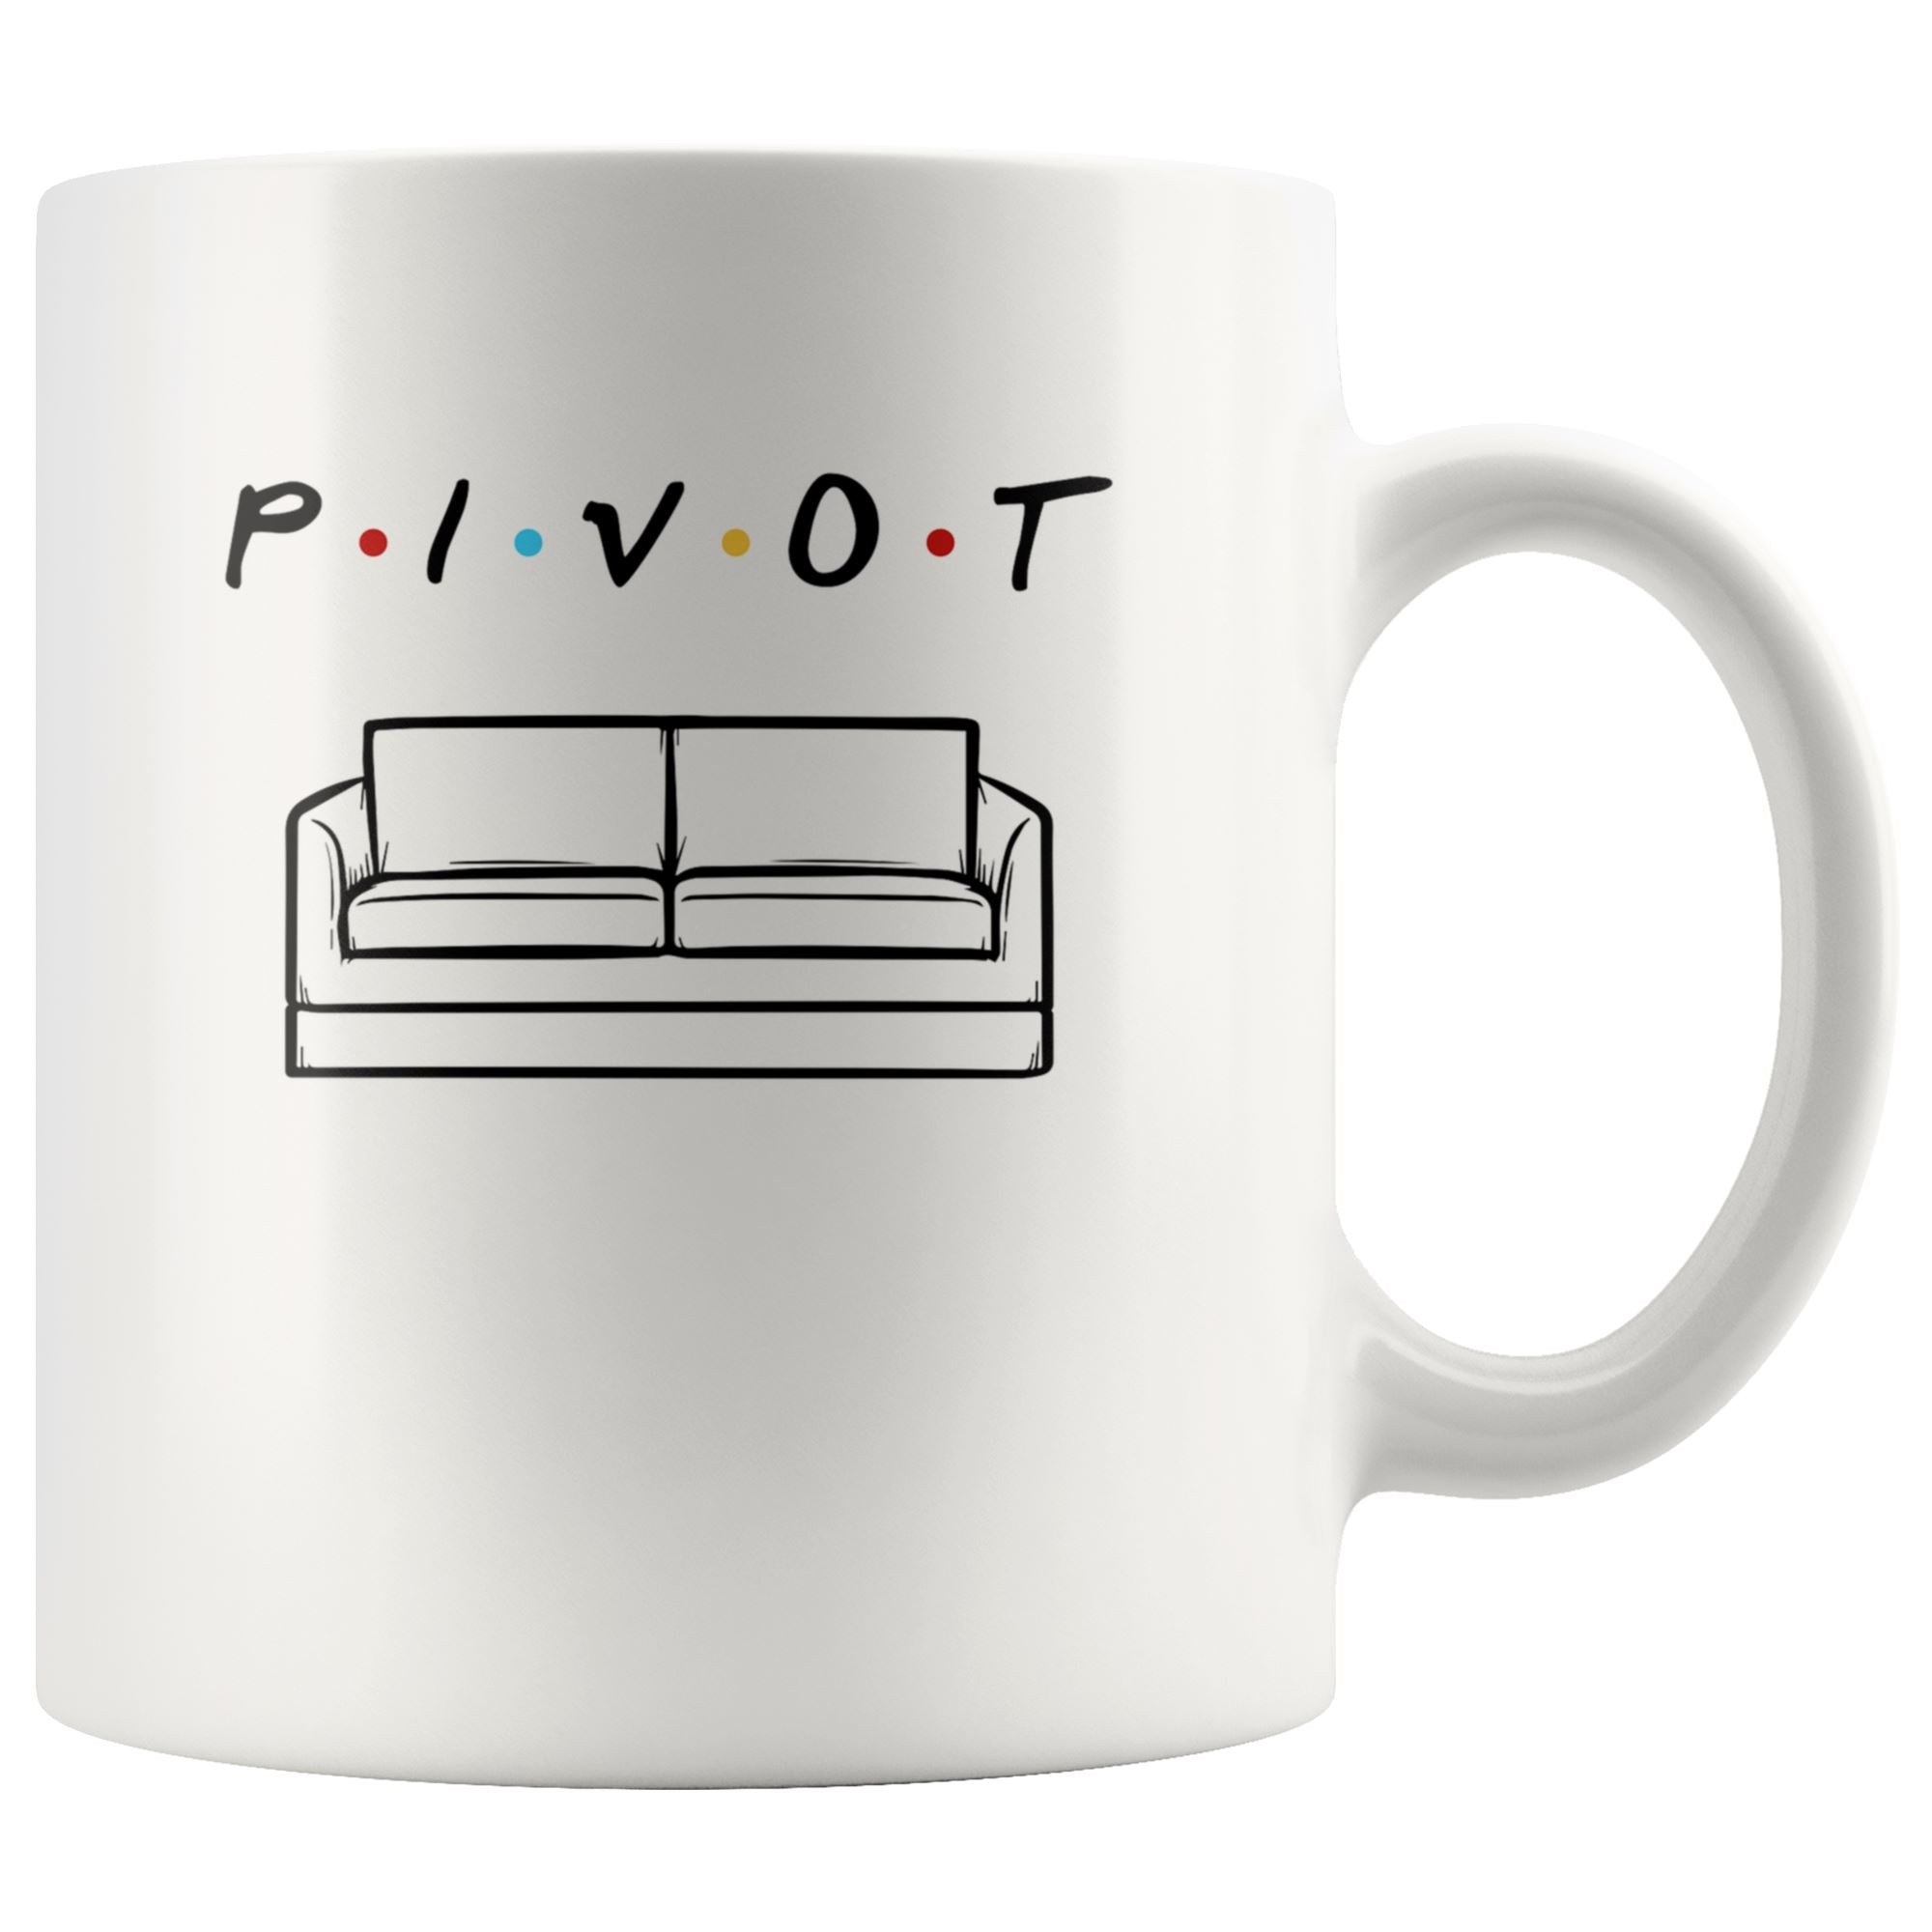 Pivot Mug Drinkware teelaunch 11oz Mug 